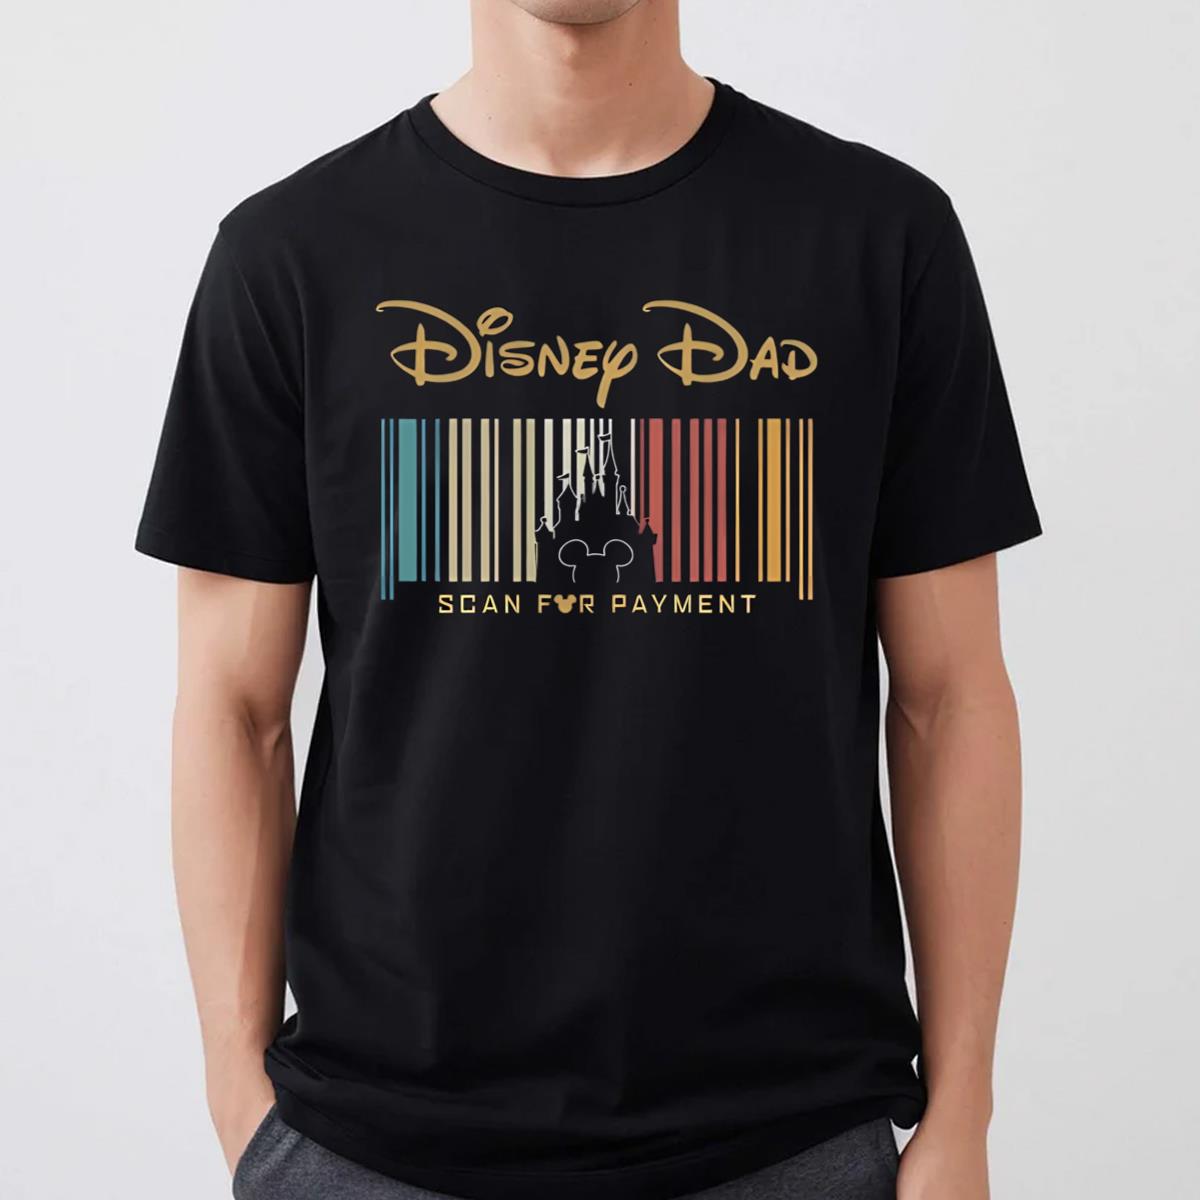  Funny Disney Shirt